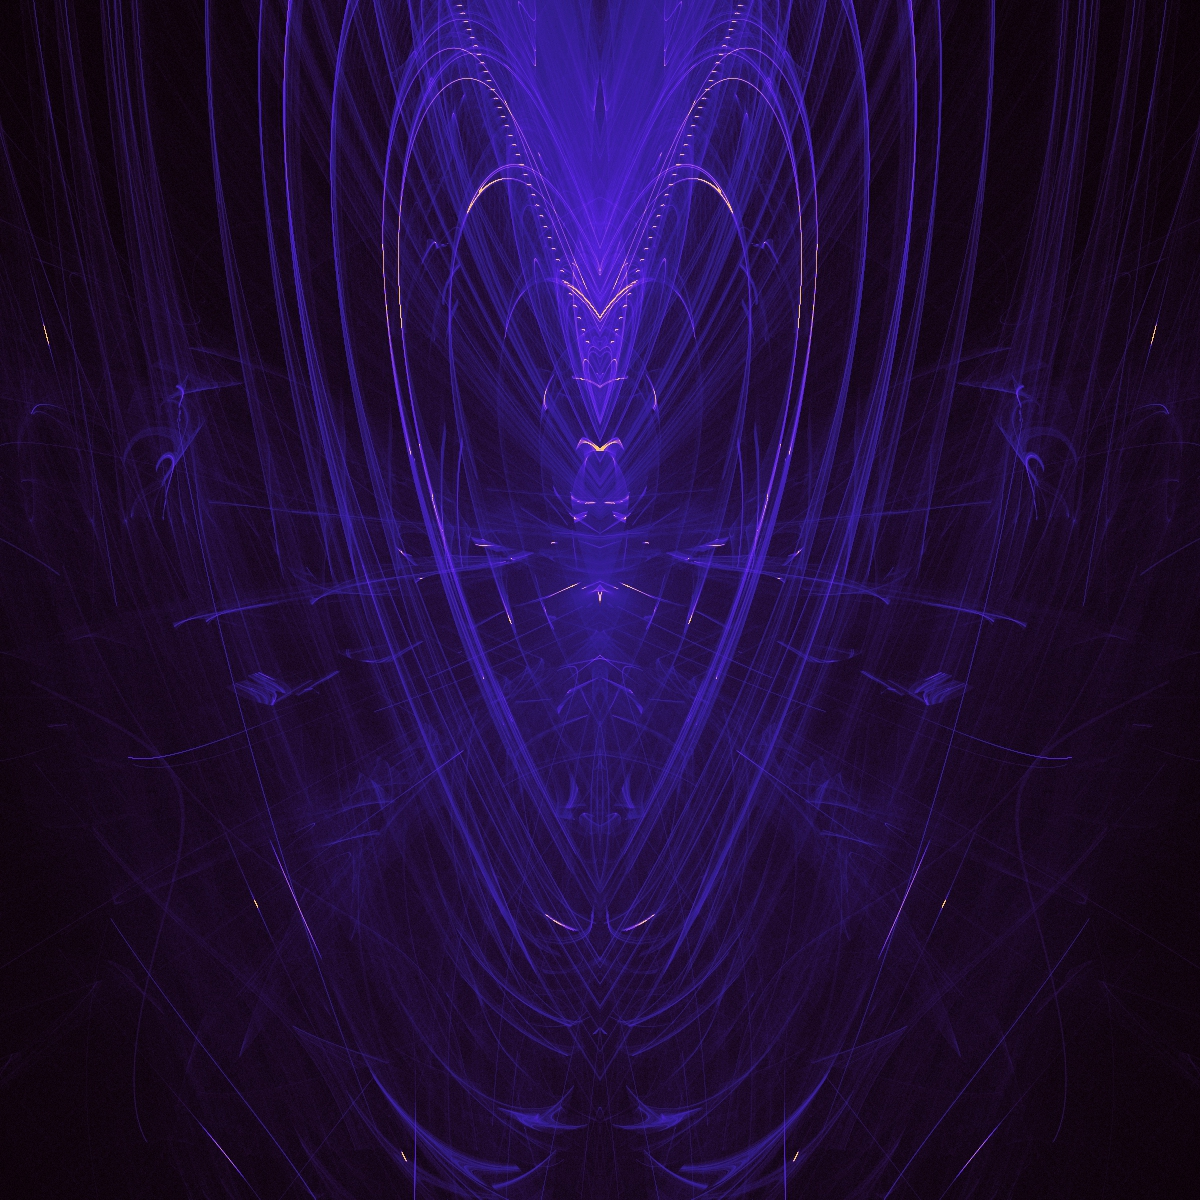 Abstract fractal art photo